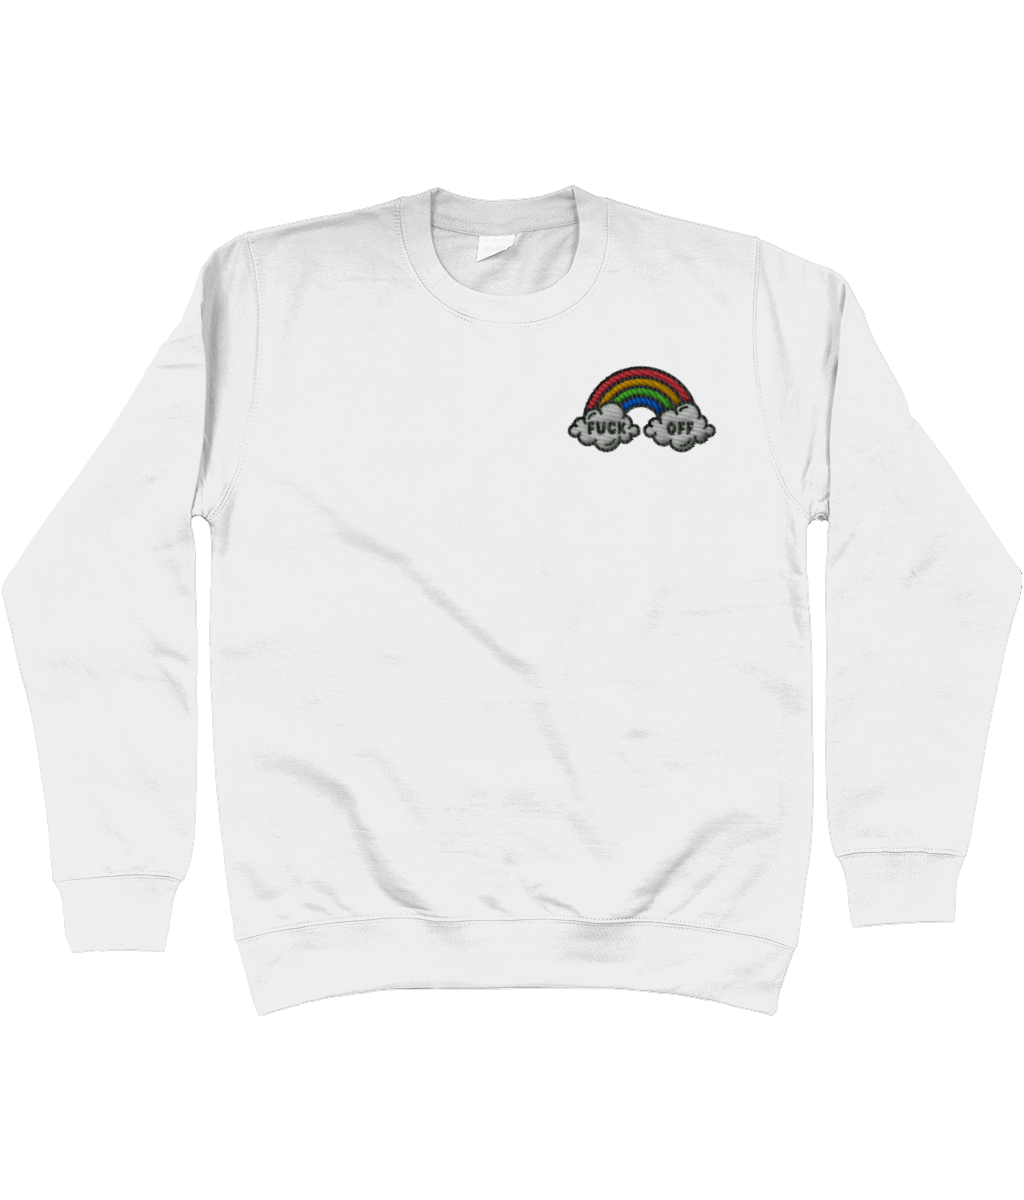 White fuck off rainbow embroidered sweatshirt